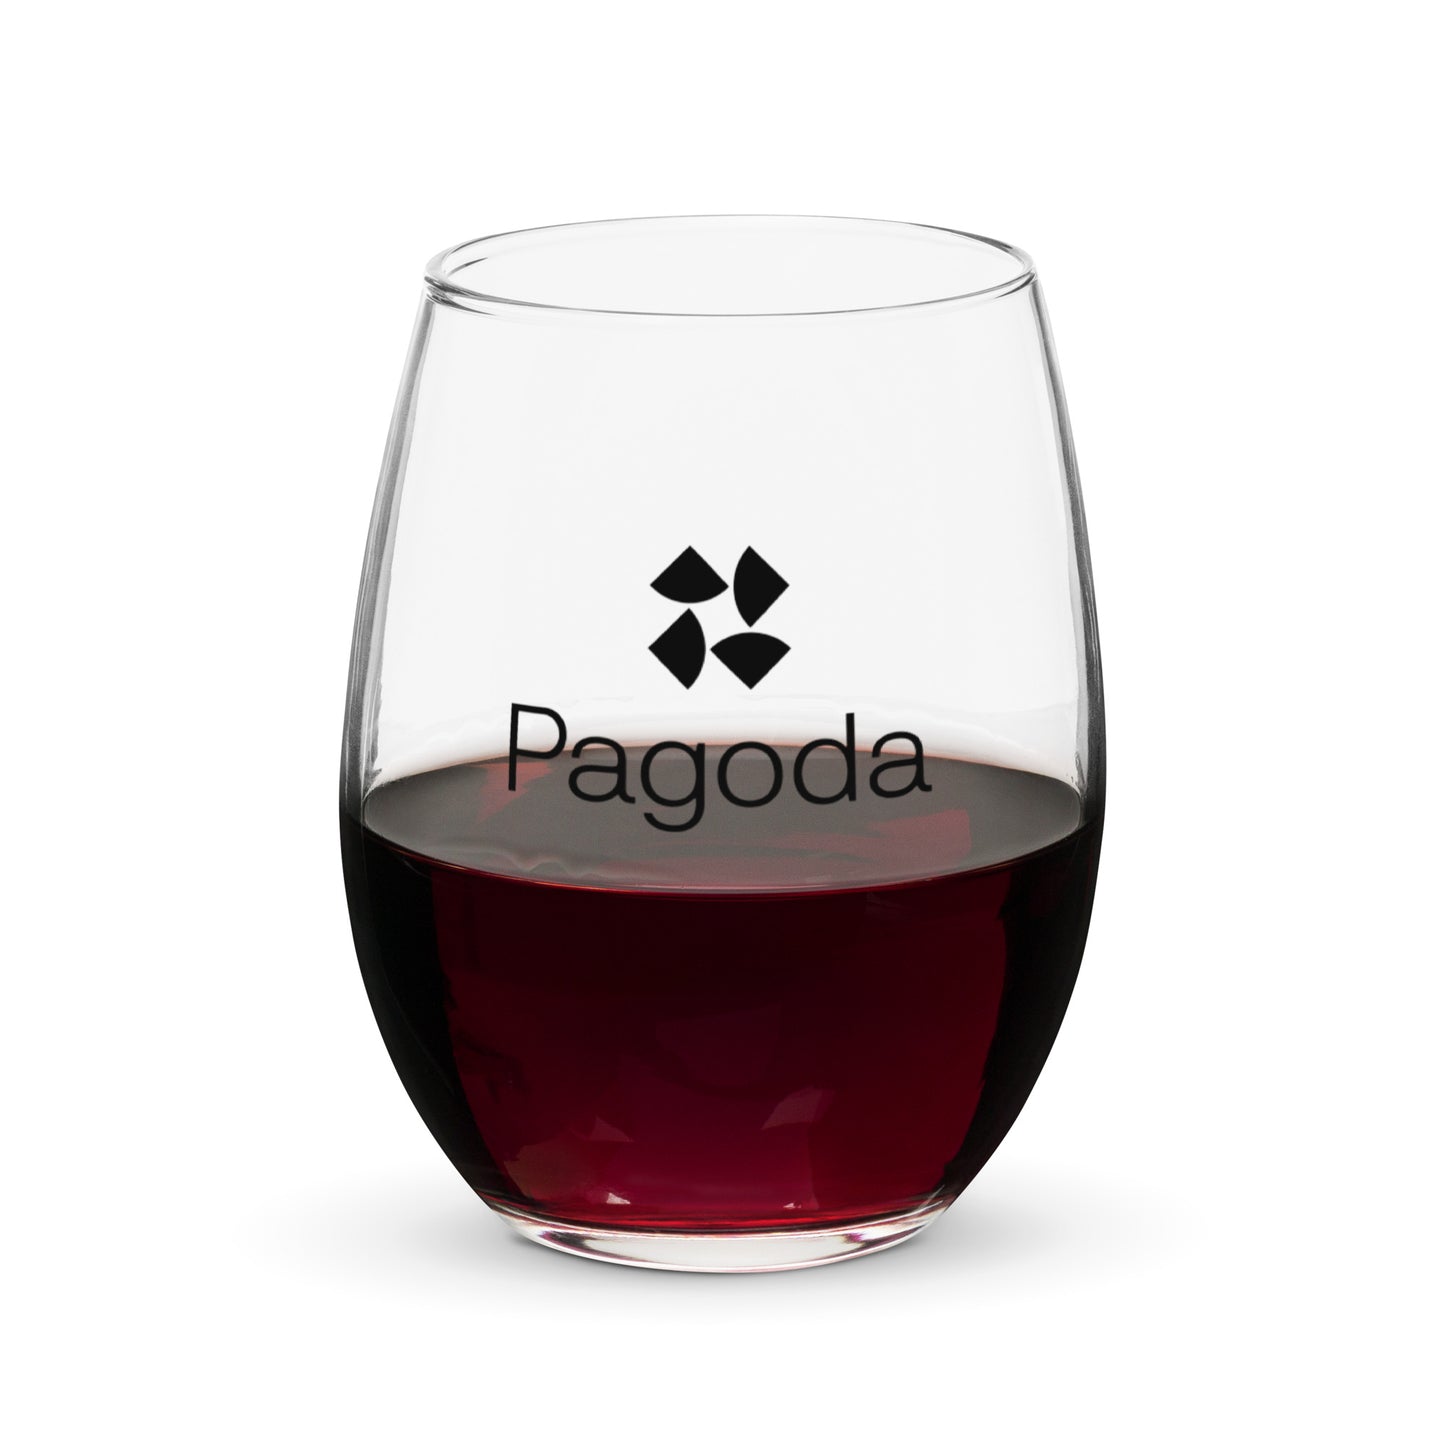 Pagoda Stemless wine glass